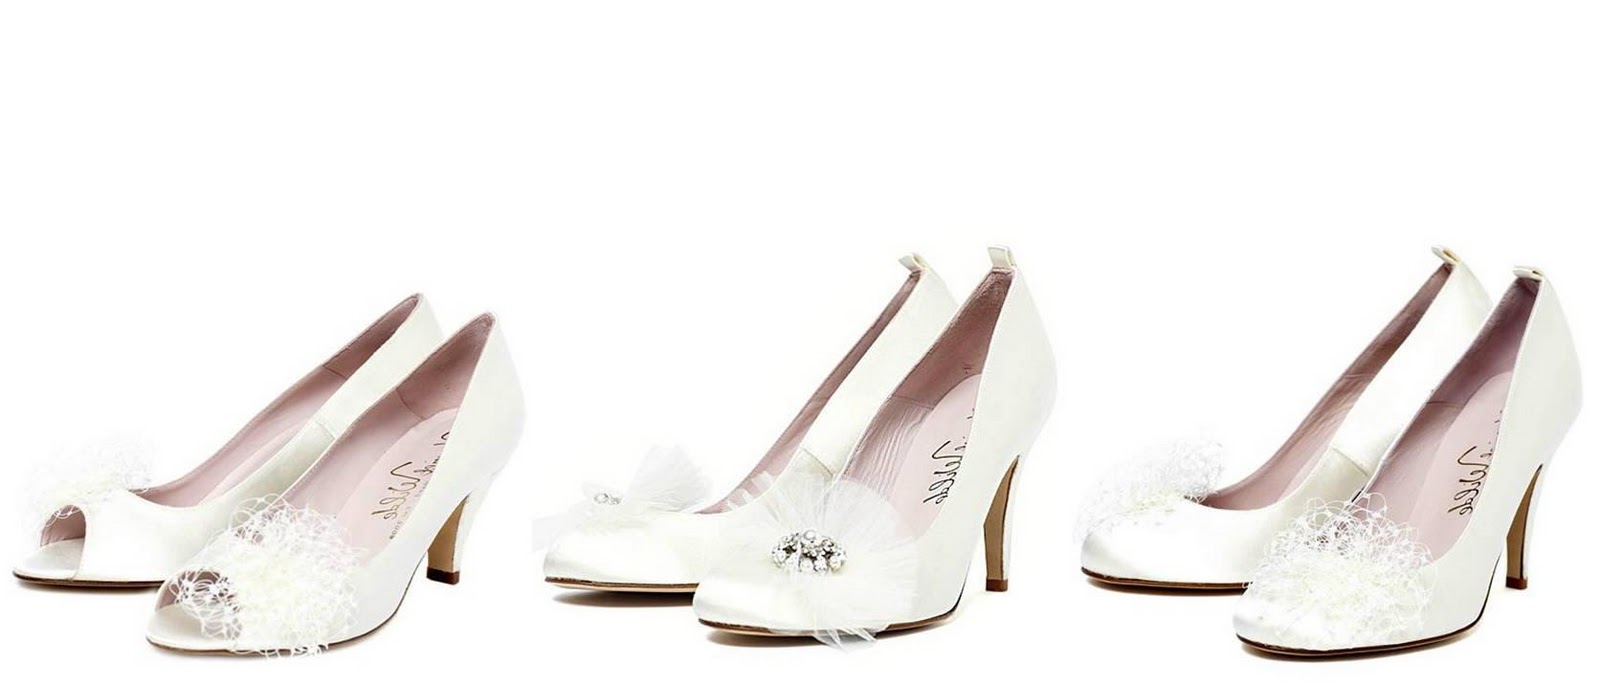 Wilde wedding shoes